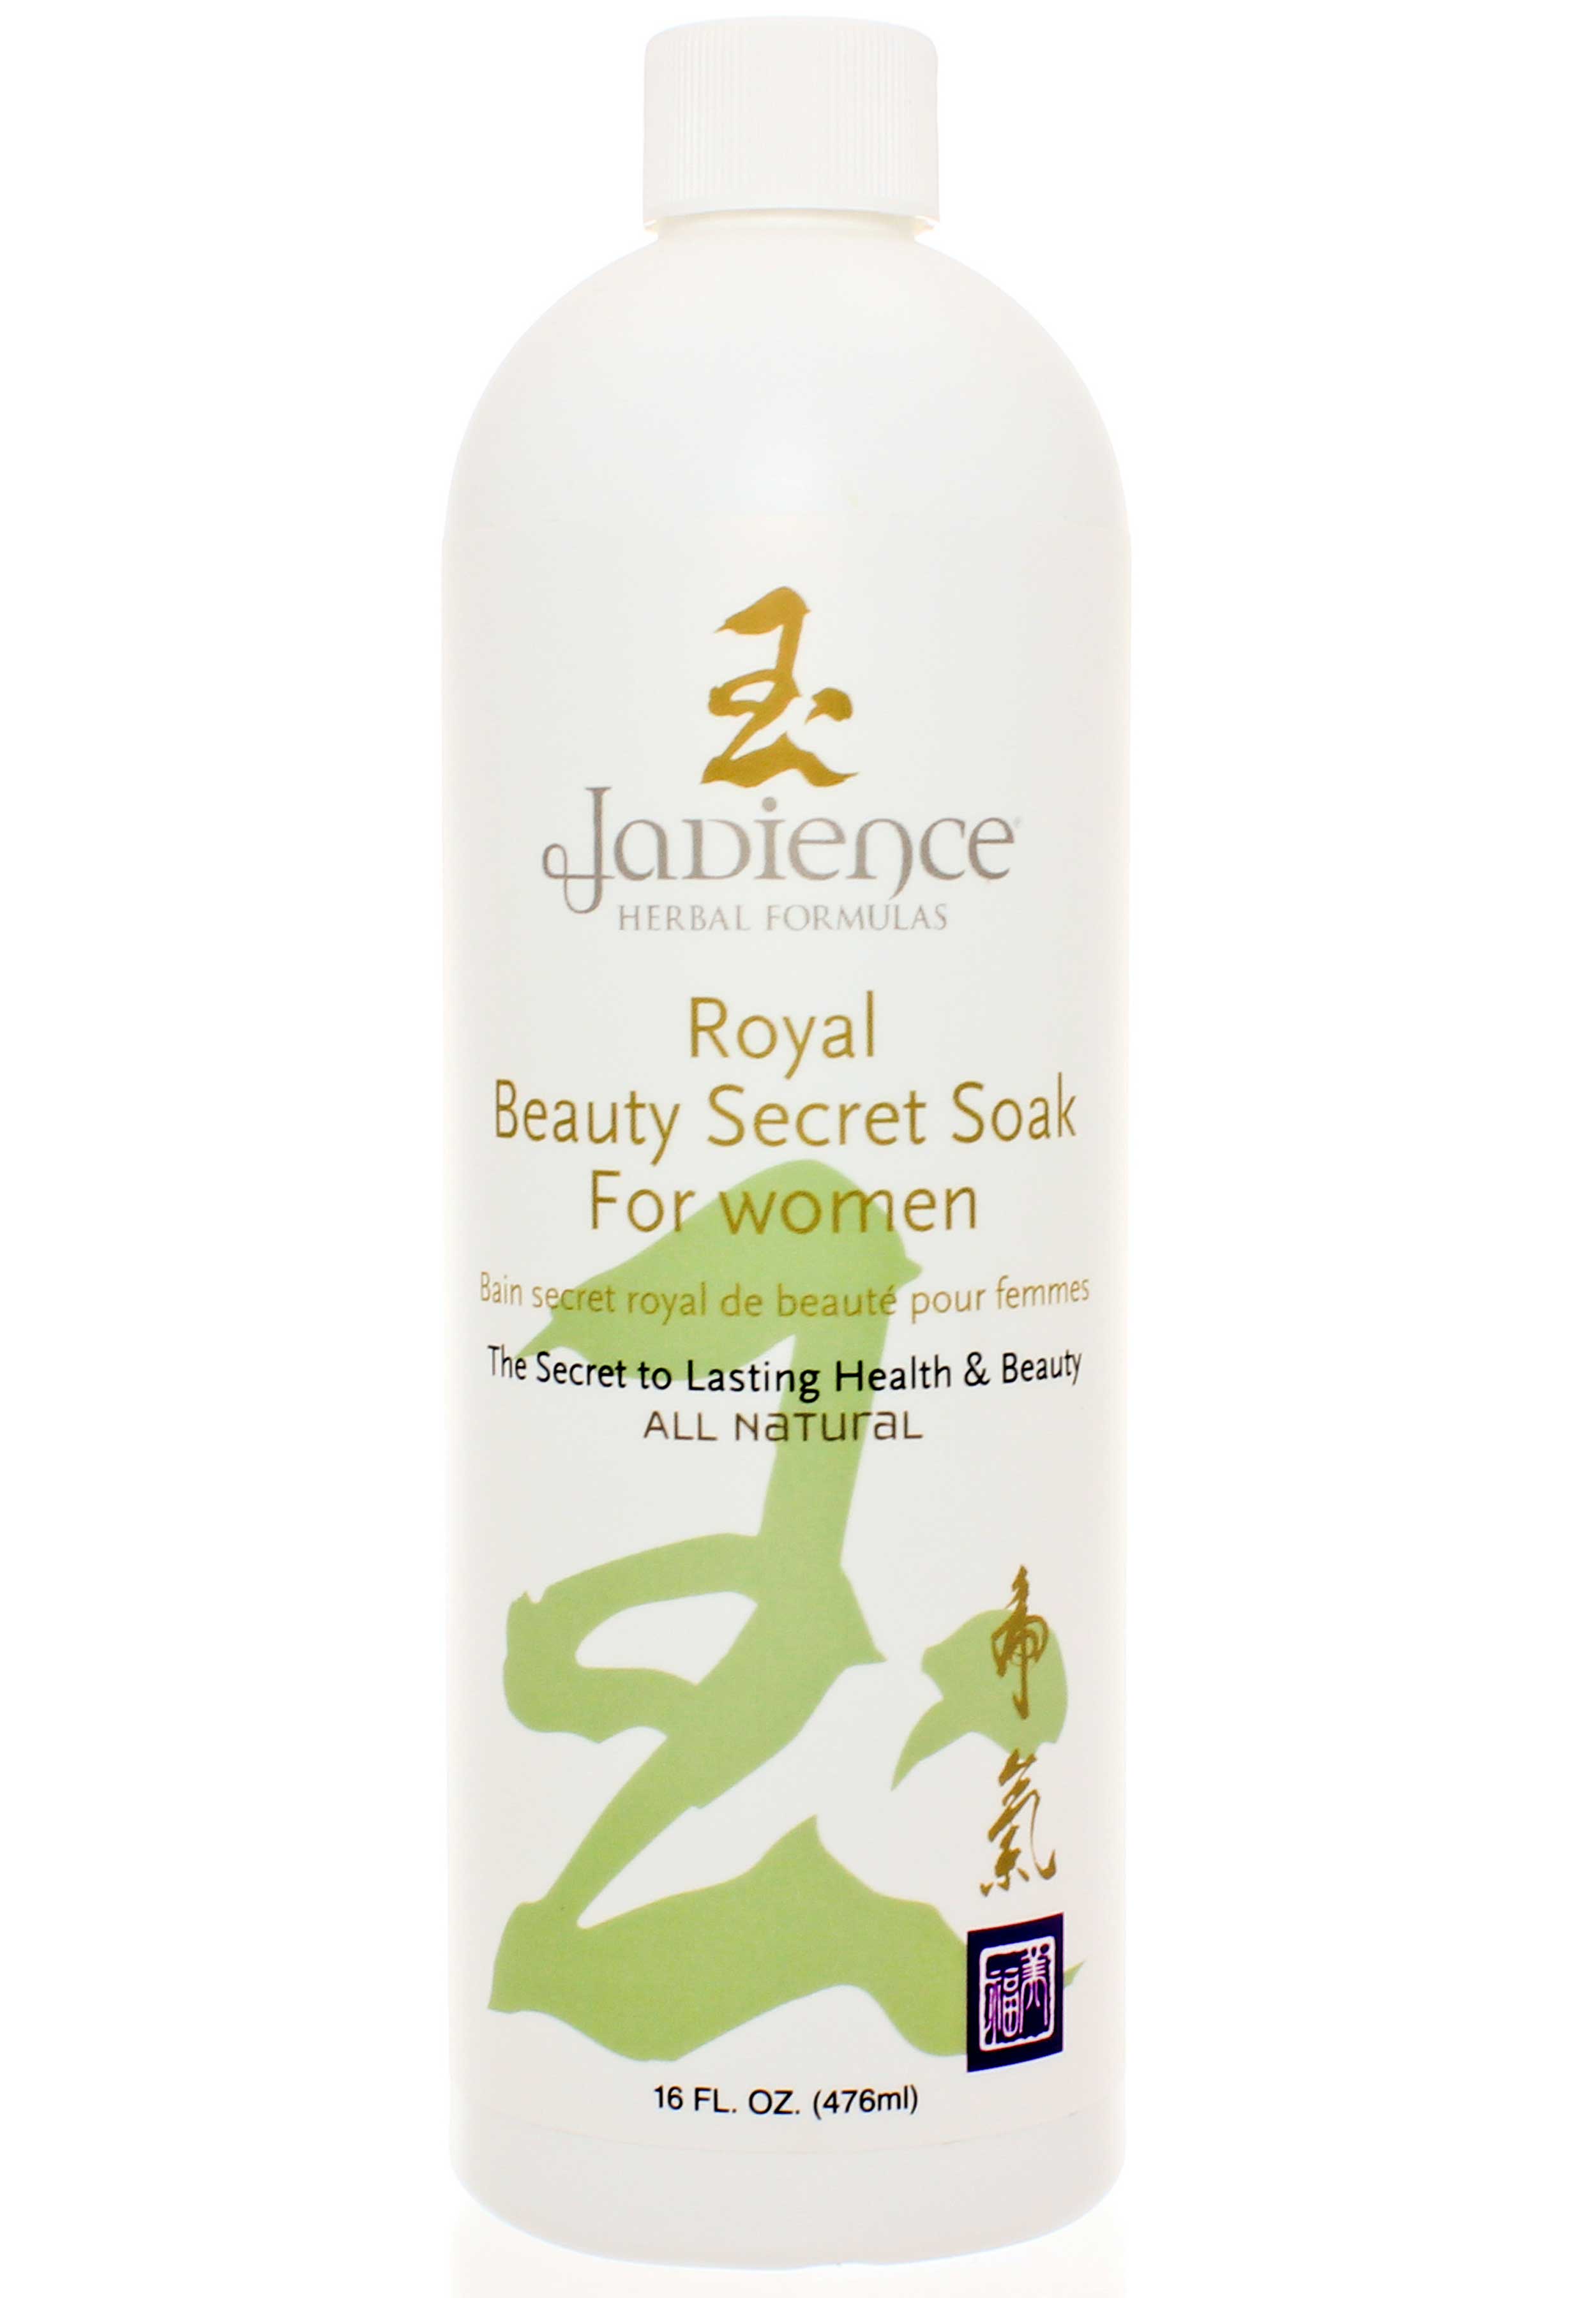 Jadience Herbal Formulas Royal Beauty Secret Soak for Women